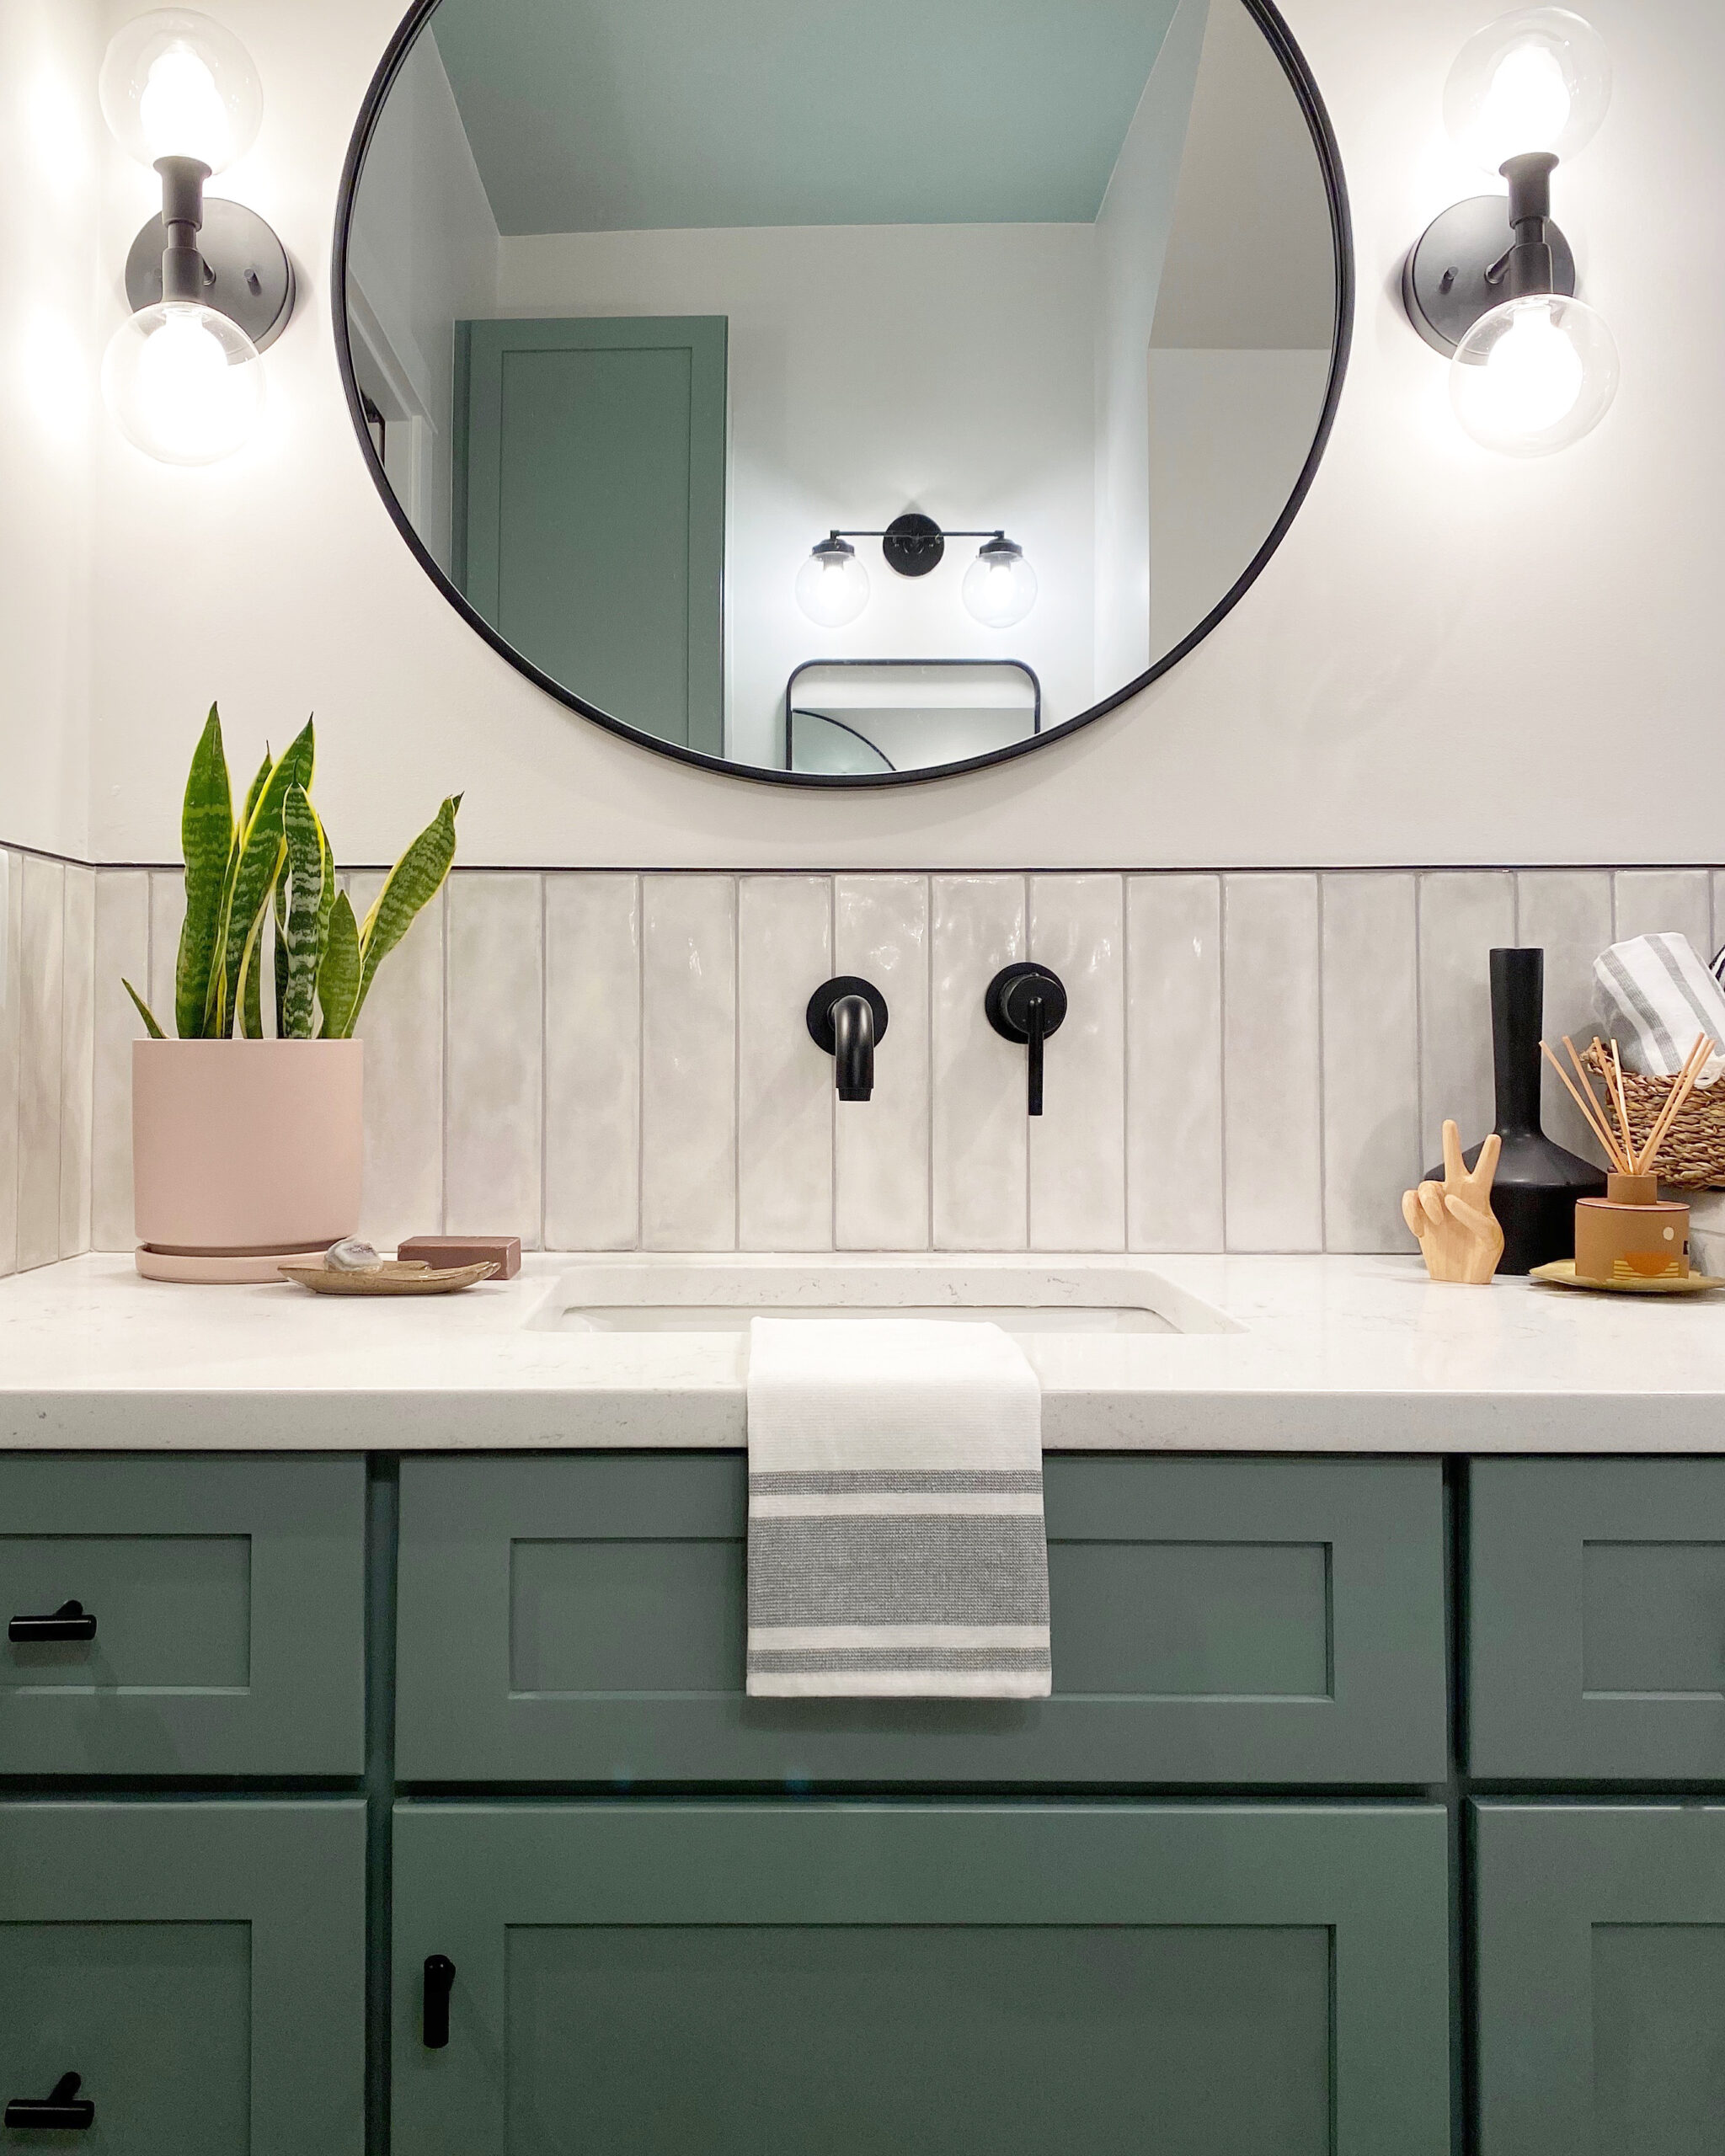 green bathroom vanity, painted cabinetry, decorative bathroom tile, vertical subway tile backsplash, round mirror